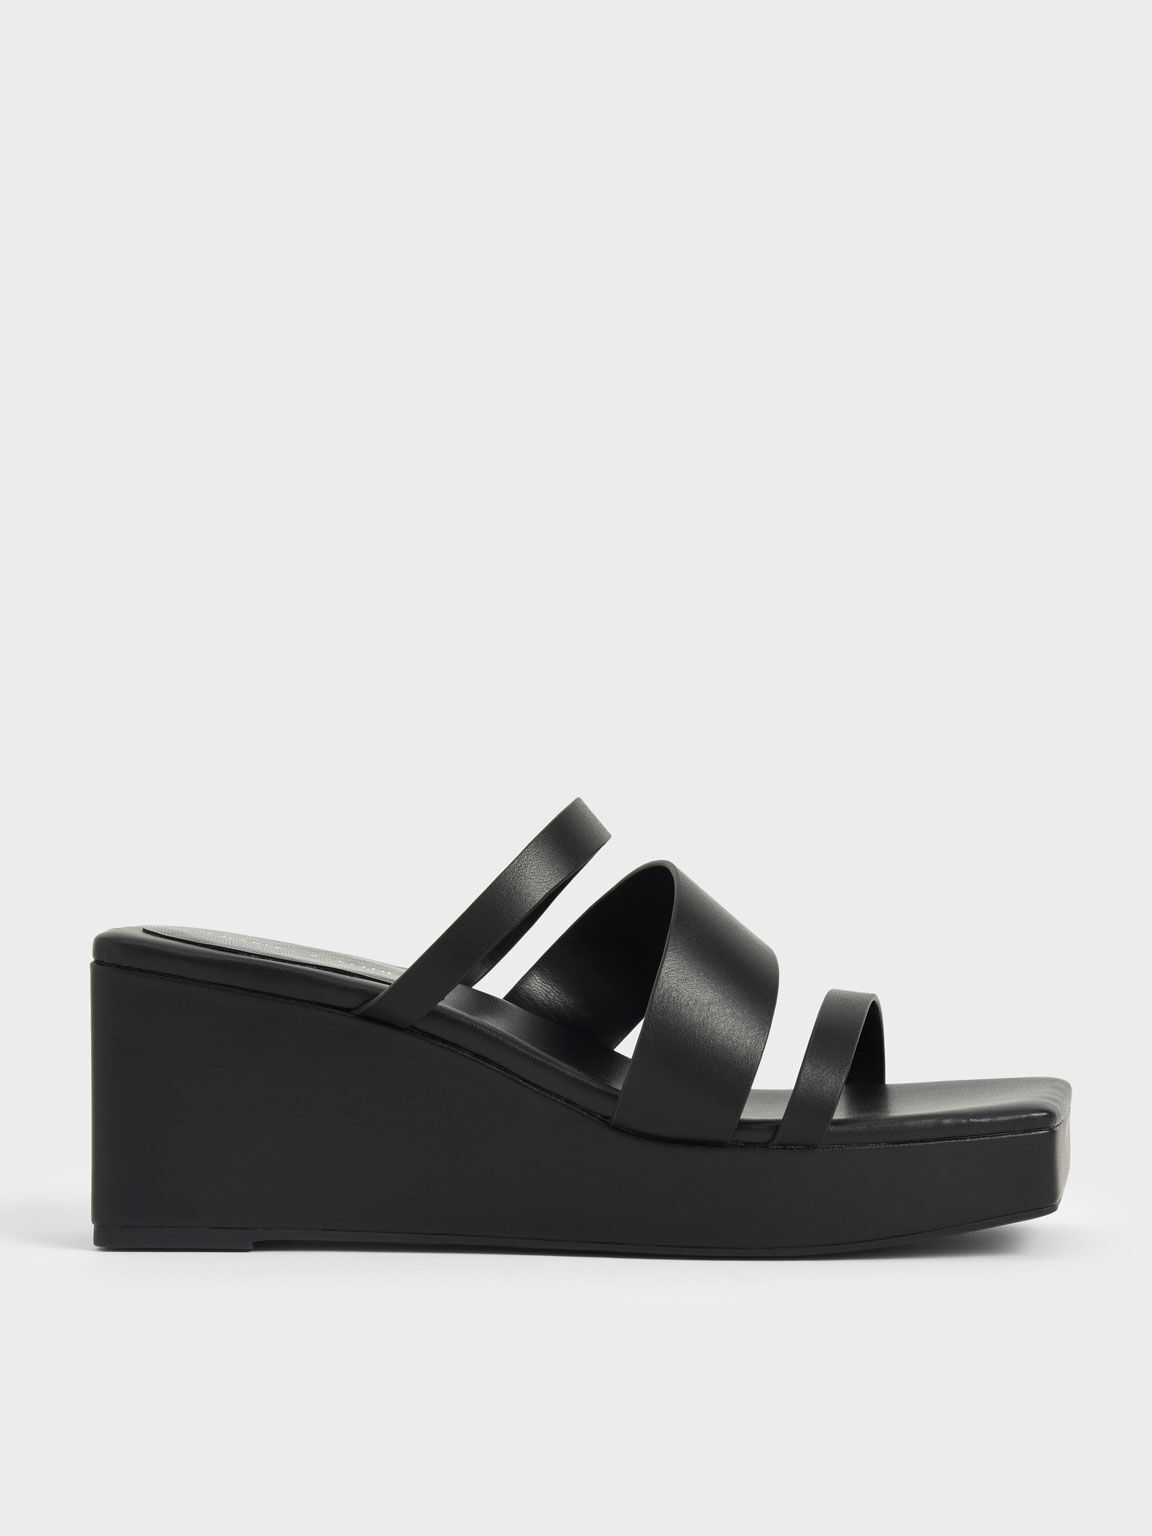 Sepatu Wedges Platform Asimetris, Black, hi-res